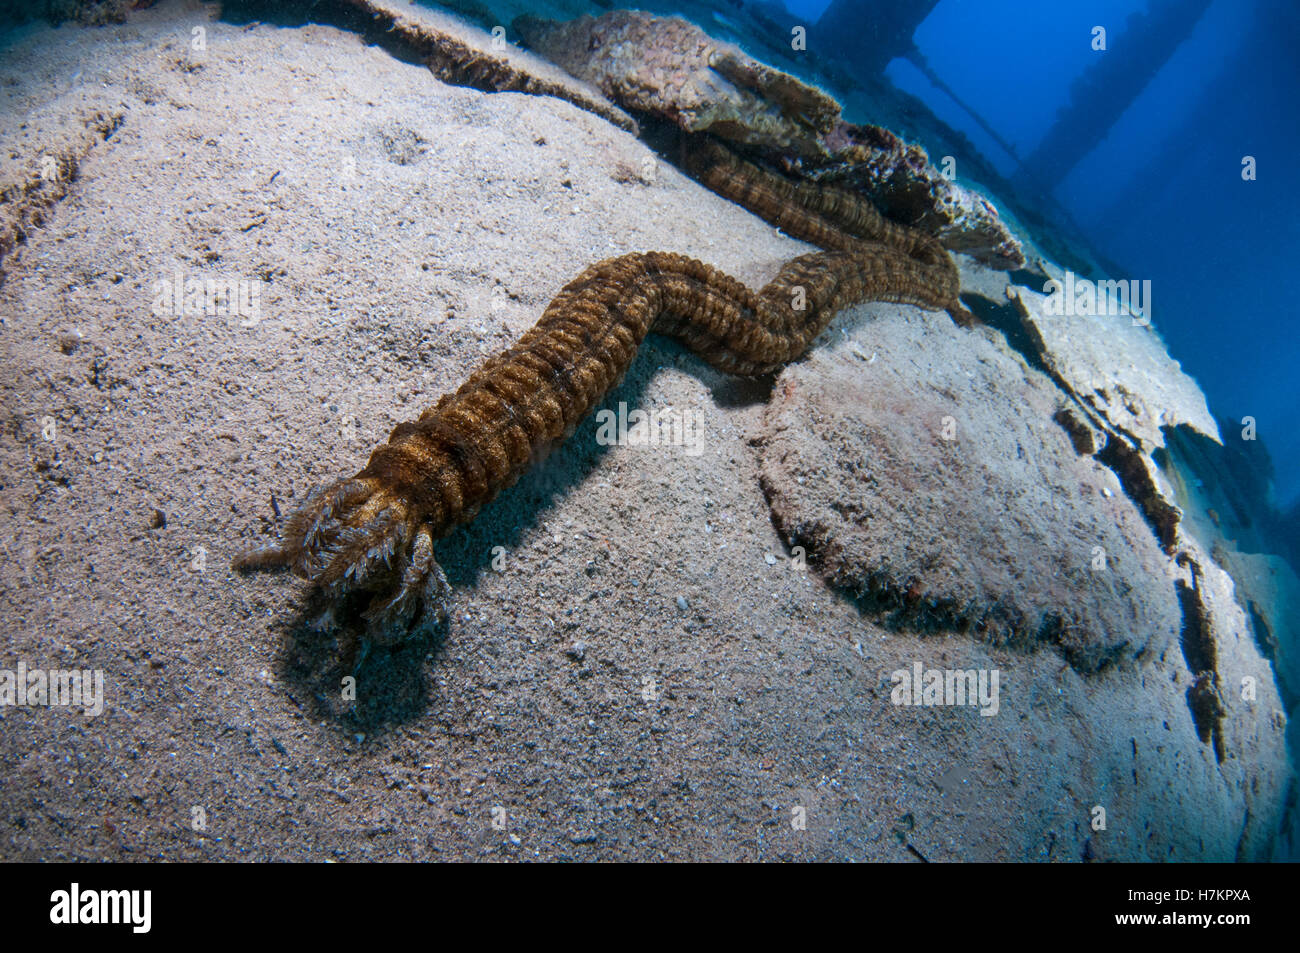 Synapta maculata sea cucumber also Zebra sea cucumber crawls on the sea bed, Red Sea, Israel Stock Photo